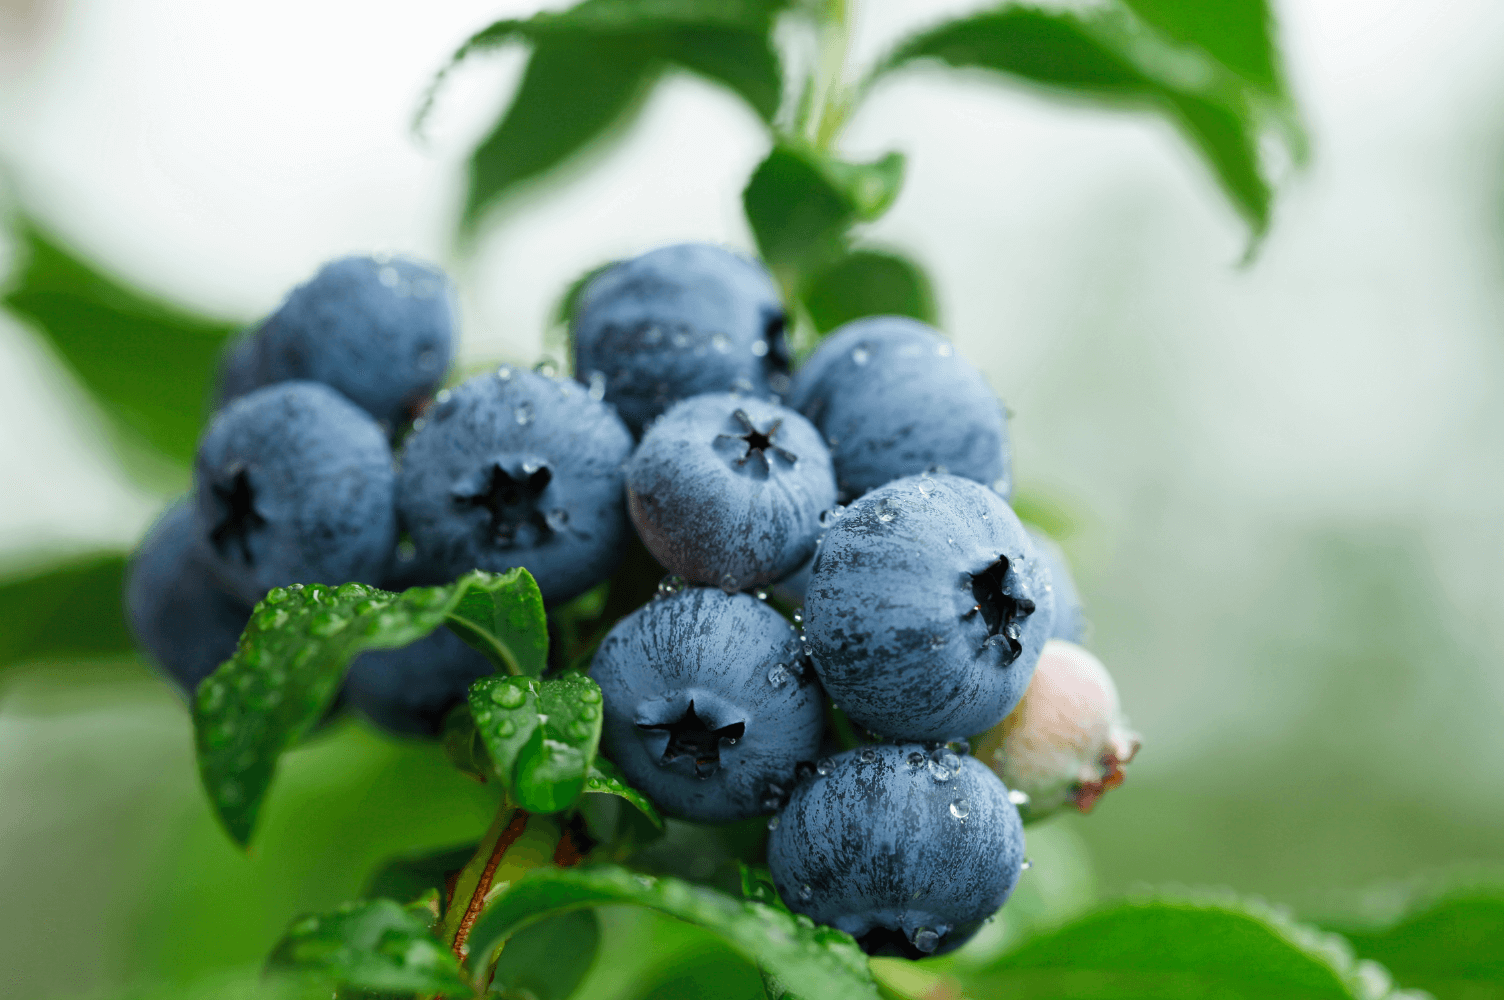 Fruits Lab SG - AUS Eureka jumbo blueberries. Sweet and